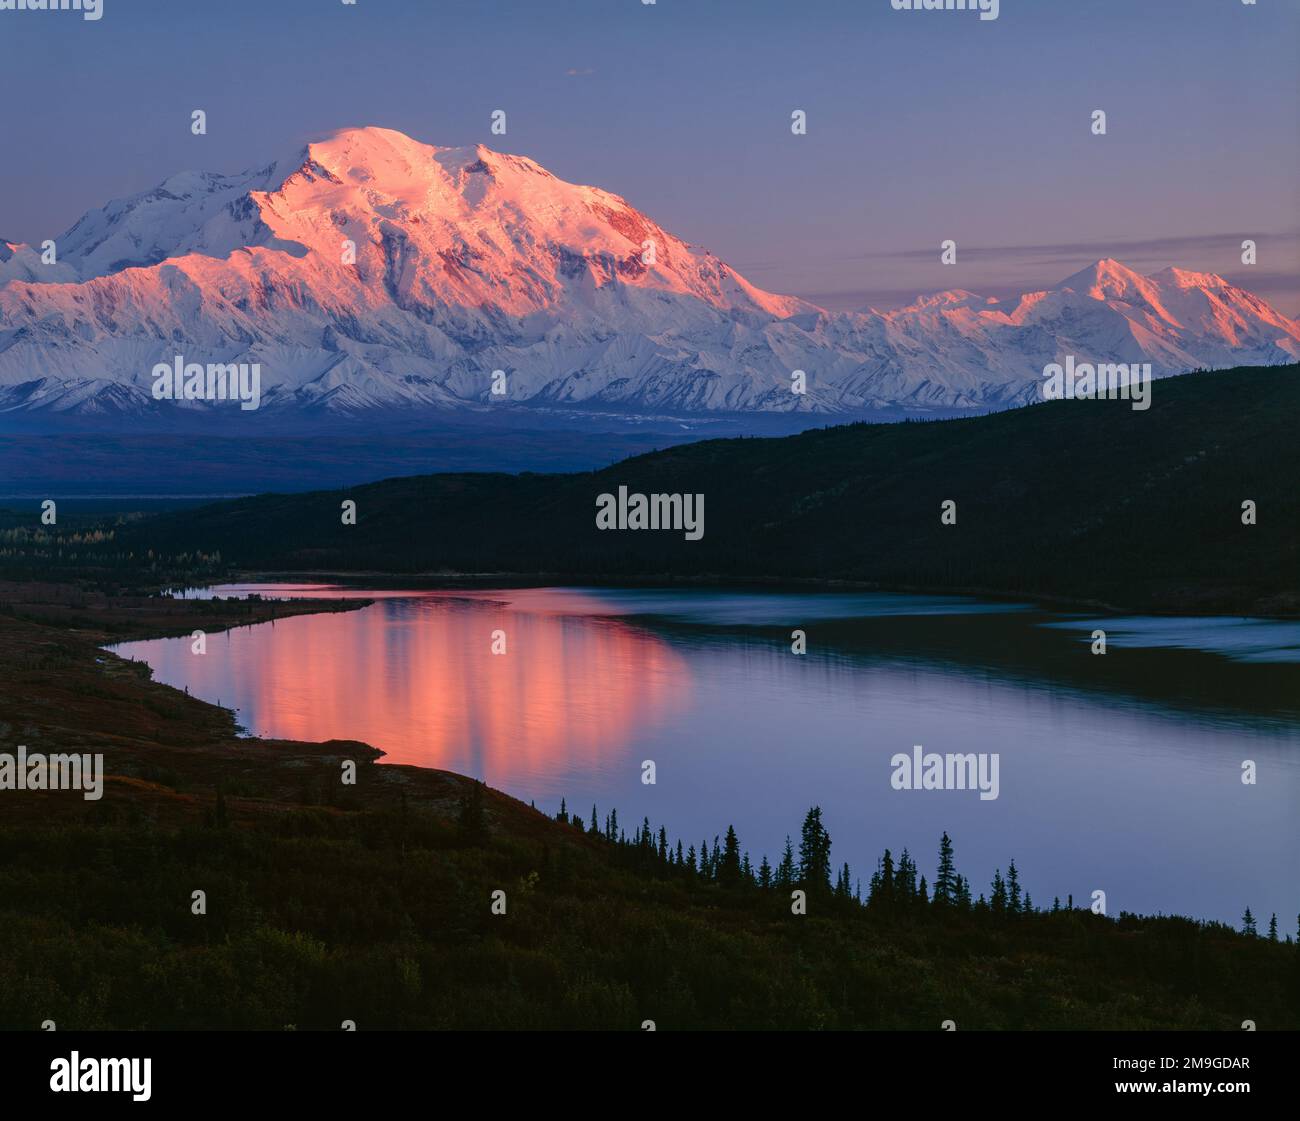 Landscape with Wonder Lake and snowcapped Denali mountain at sunset, Denali National Park, Alaska, USA Stock Photo